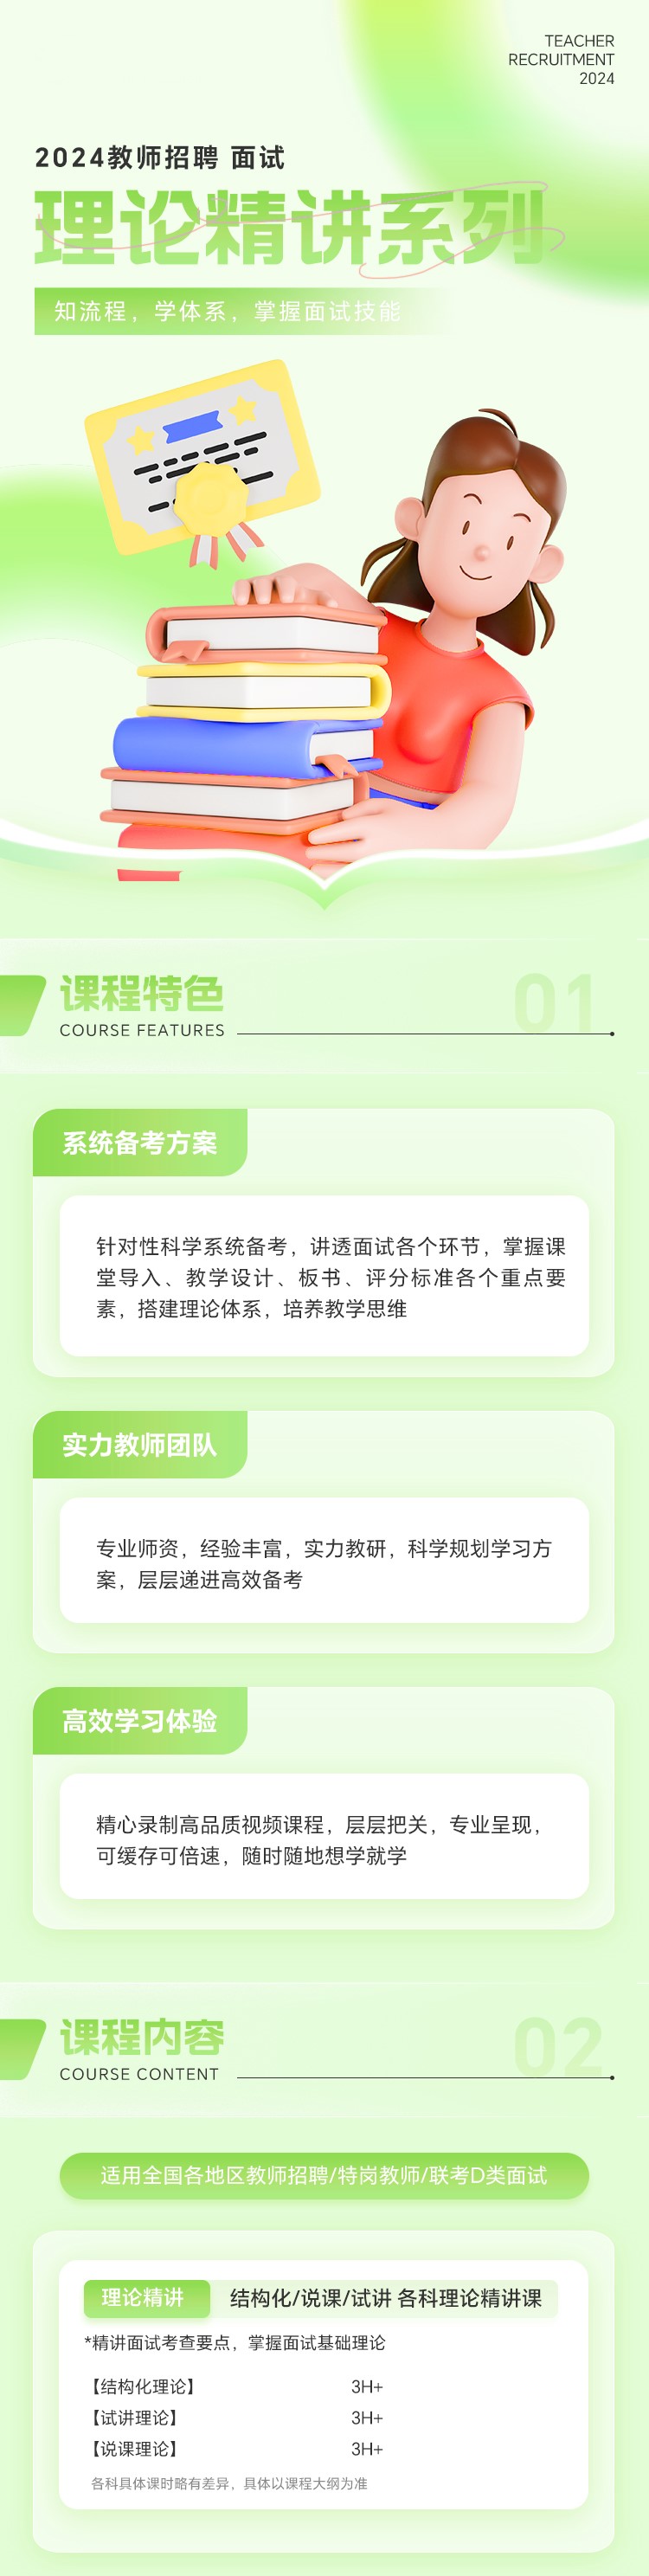 https://simg01.gaodunwangxiao.com/uploadfiles/product-center/202404/23/39f08_20240423111405.jpg